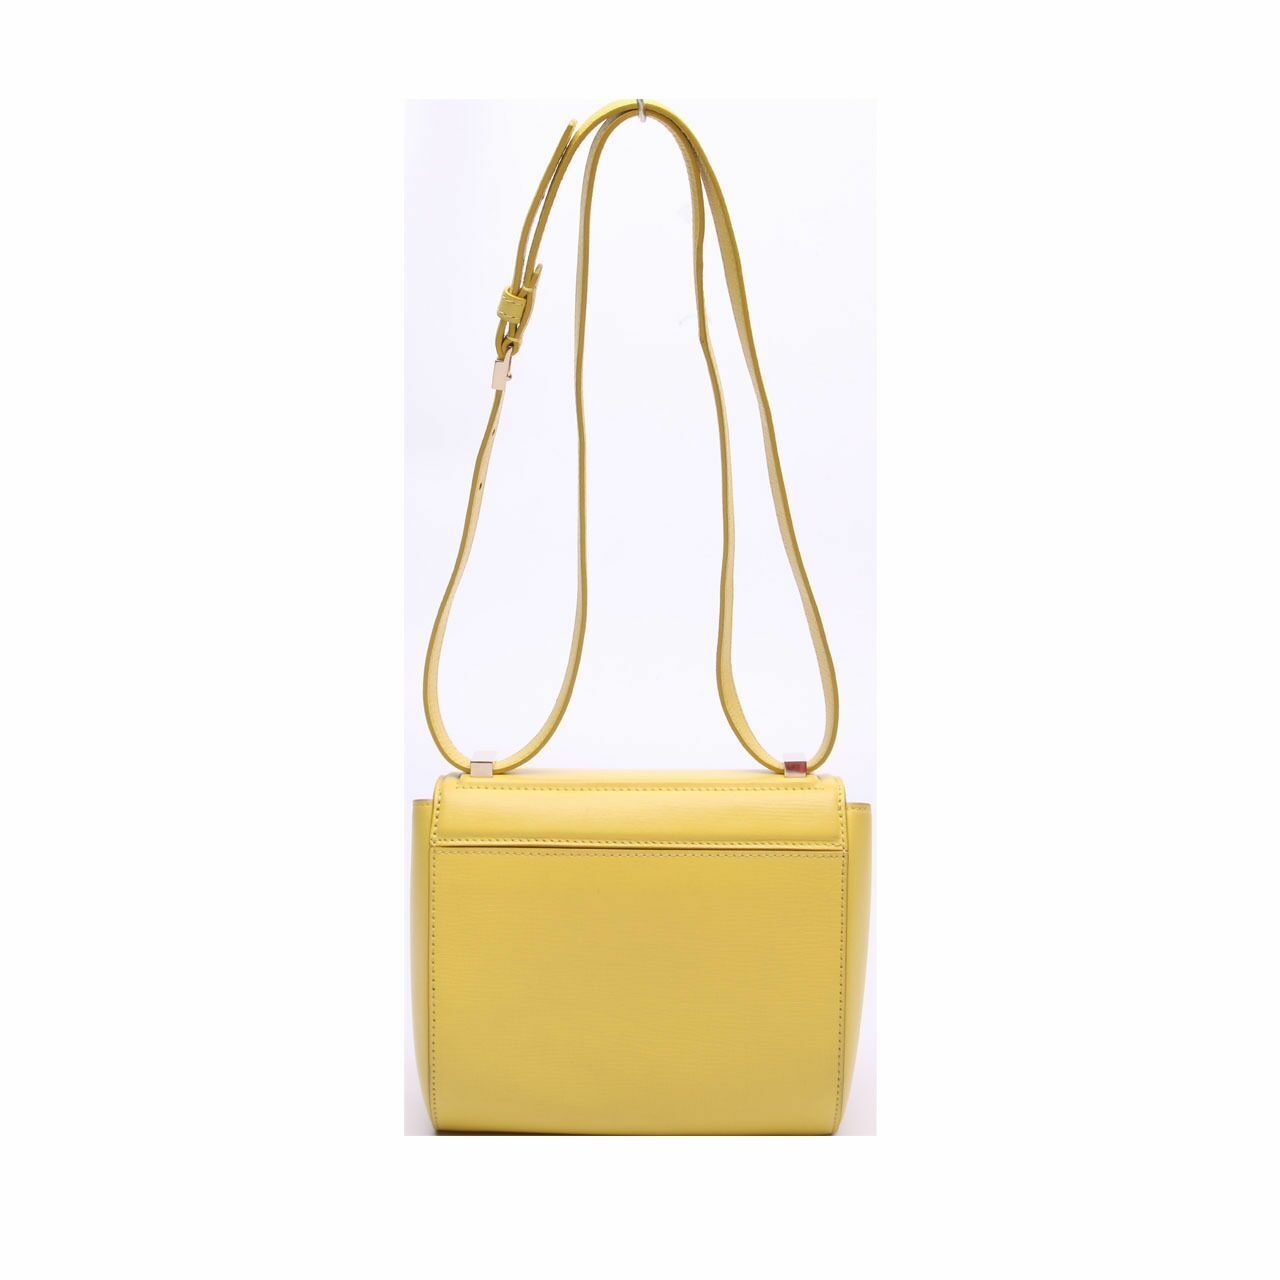 Givenchy Pandora Box Mini Yellow Sling Bag